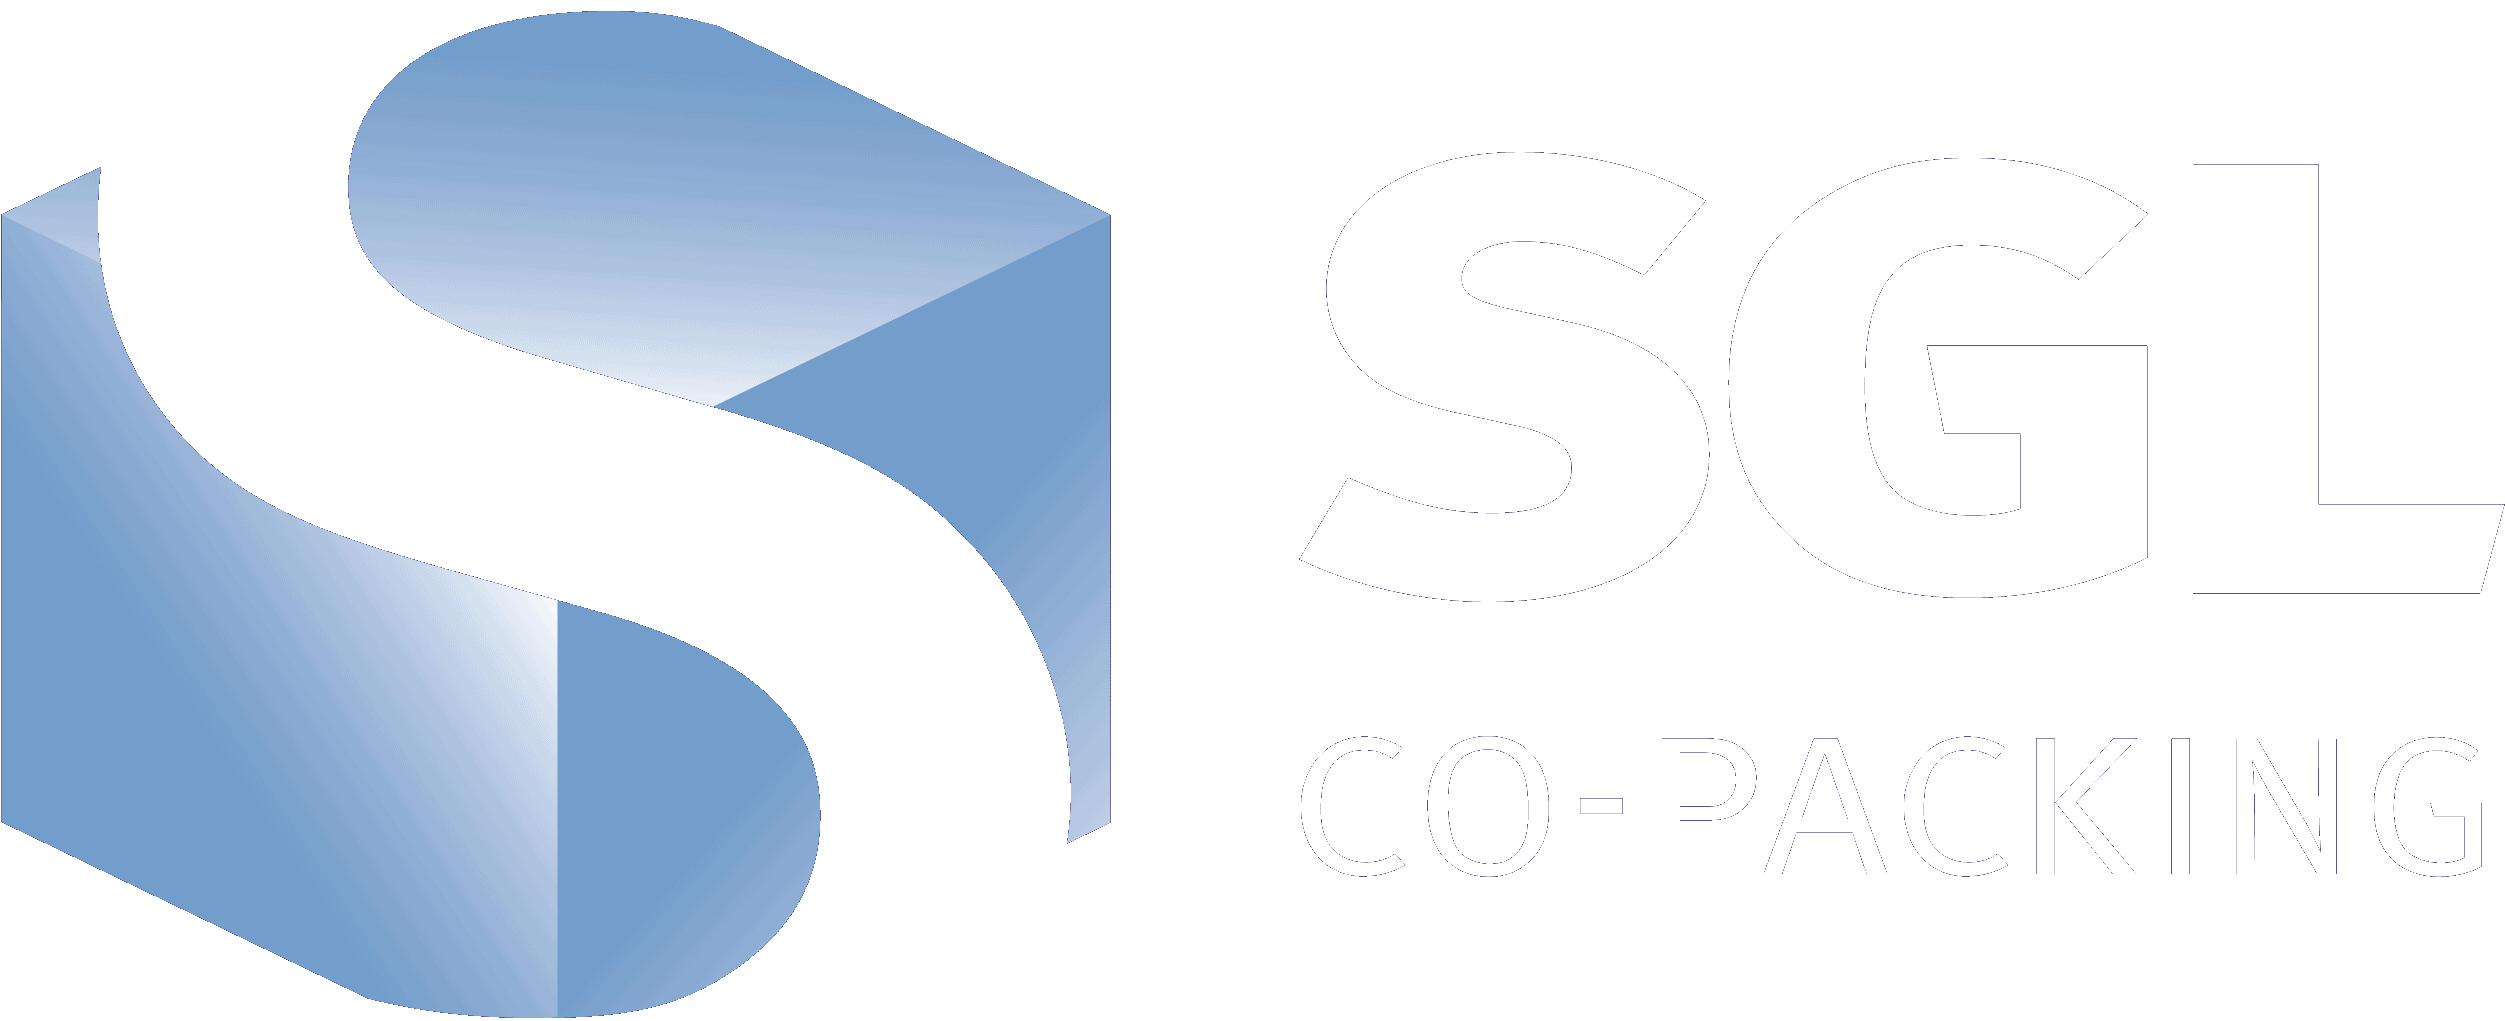 SGL Co-packing logo